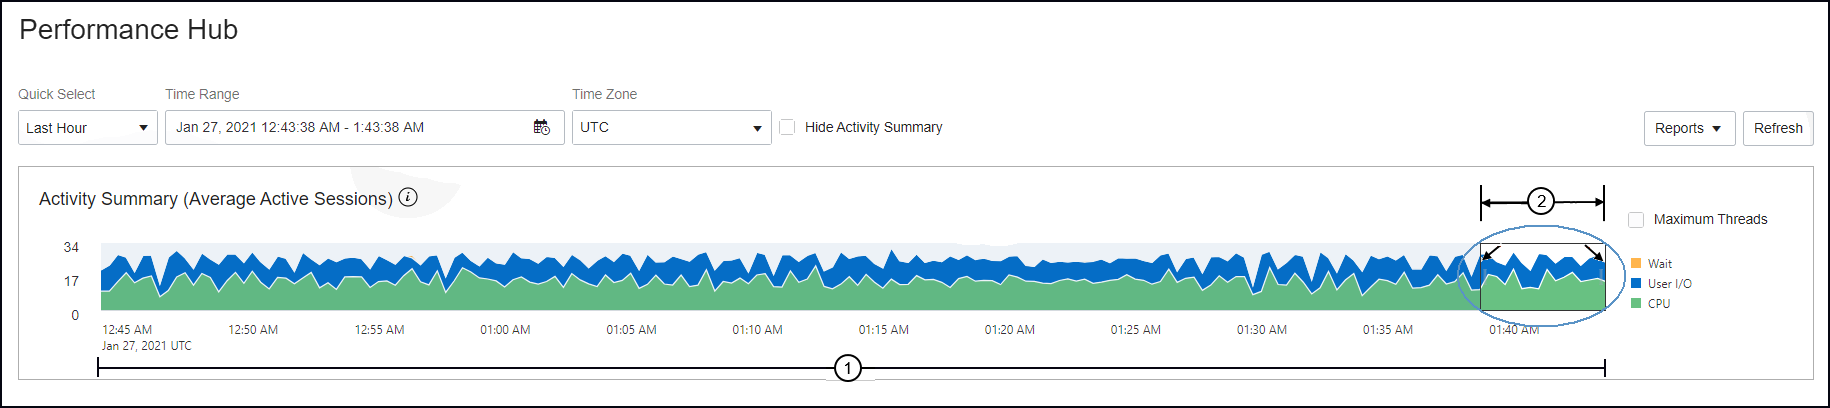 Performance Hub Activity Summary graph and controls